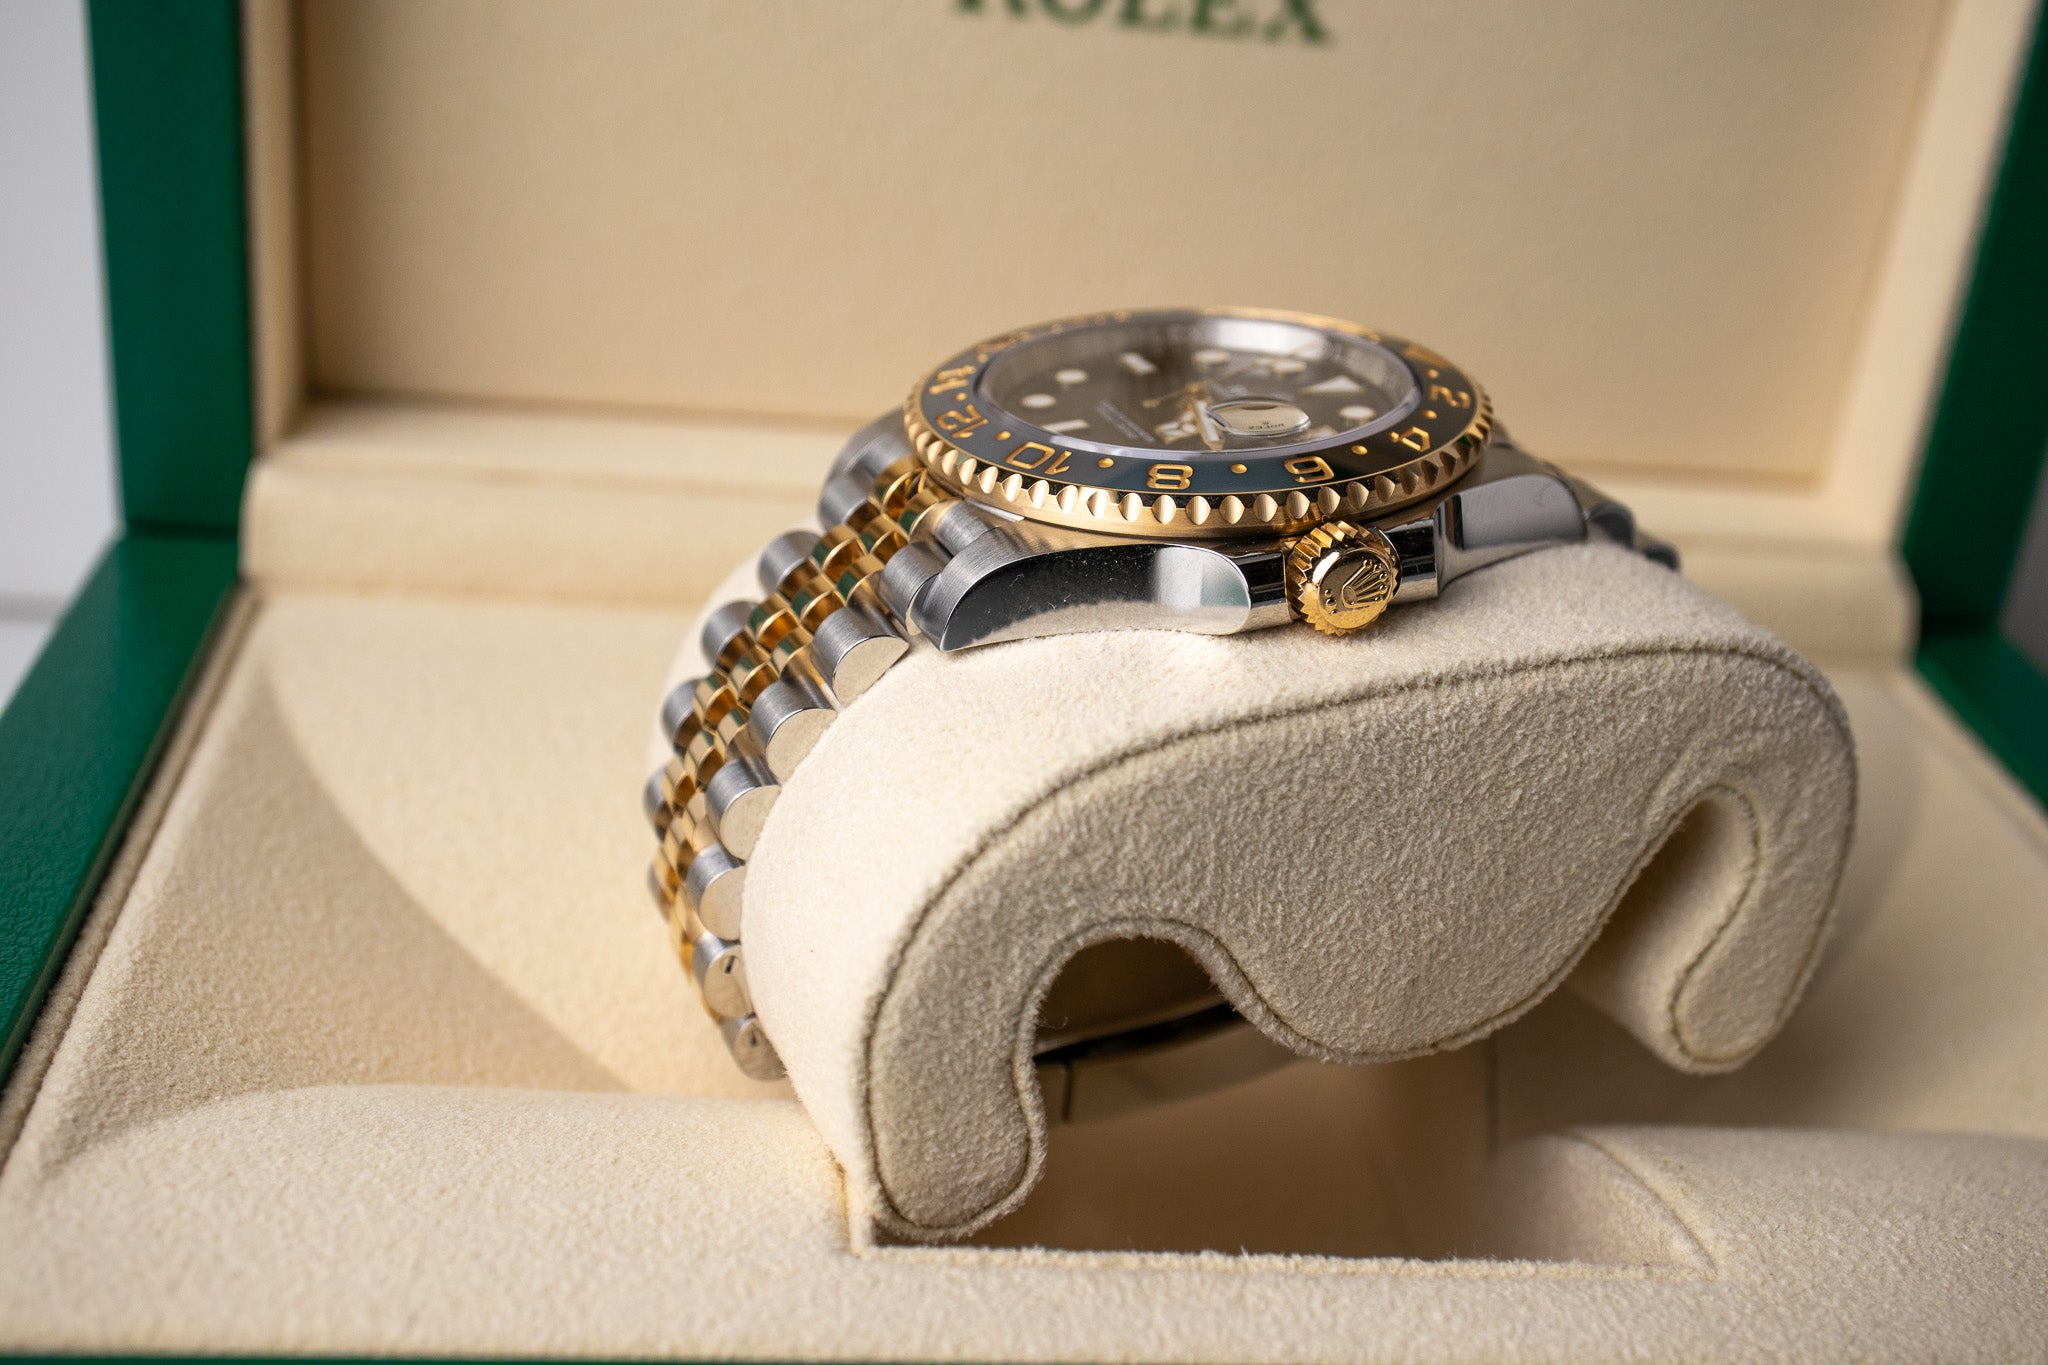 Rolex GMT Master II 126713GRNR